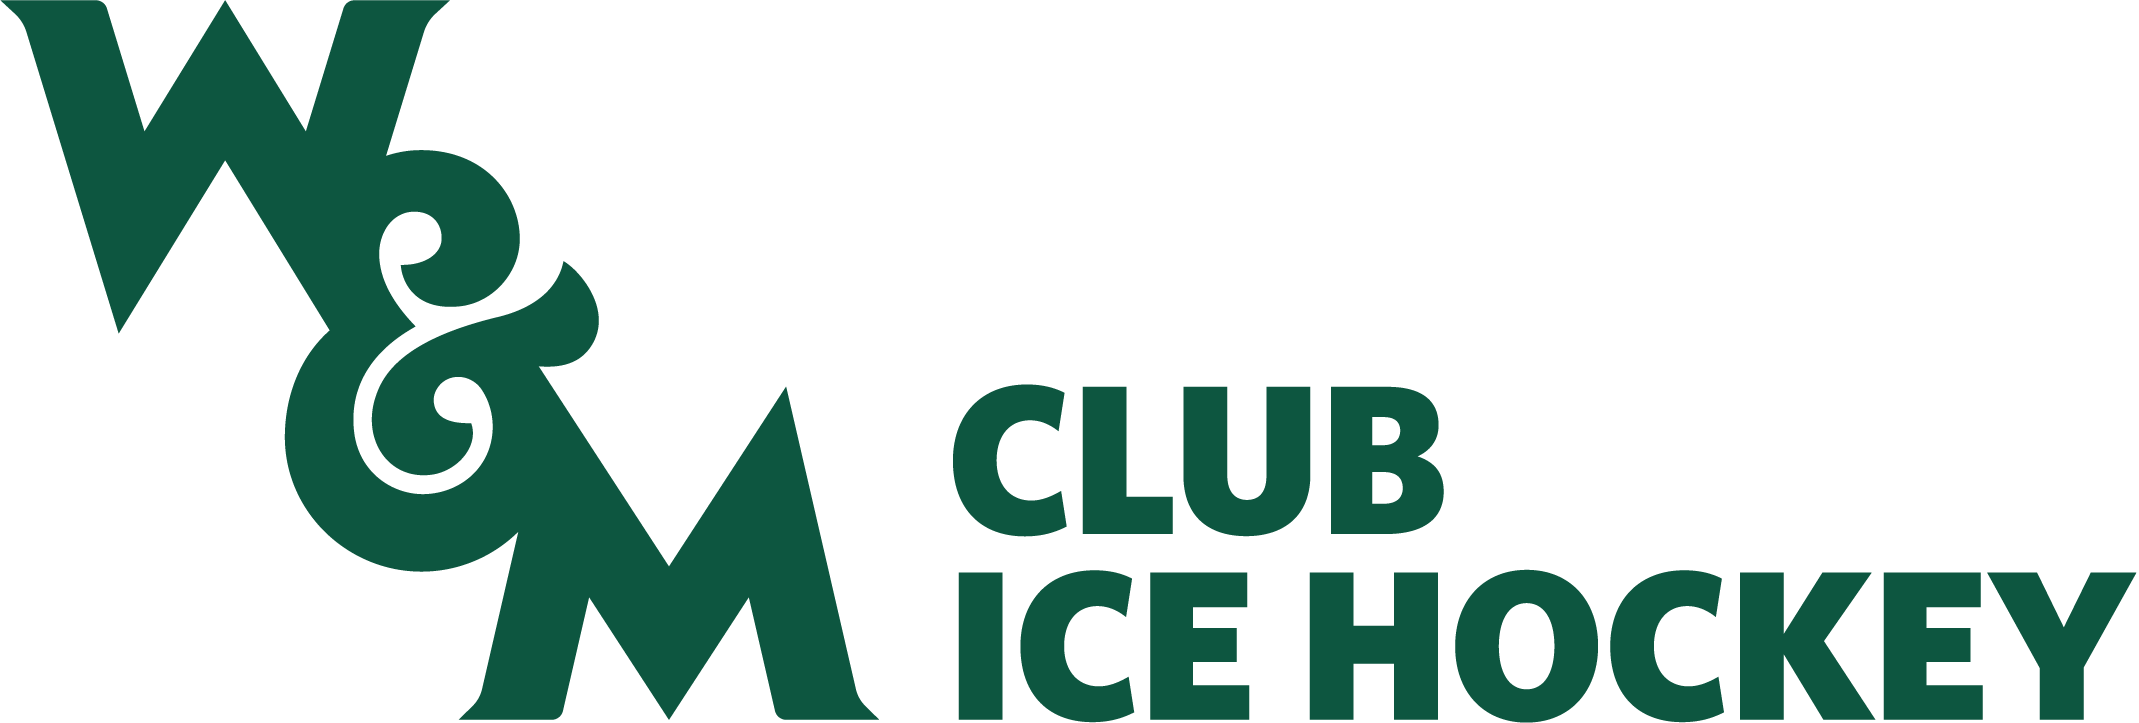 Club Ice Hockey Logo